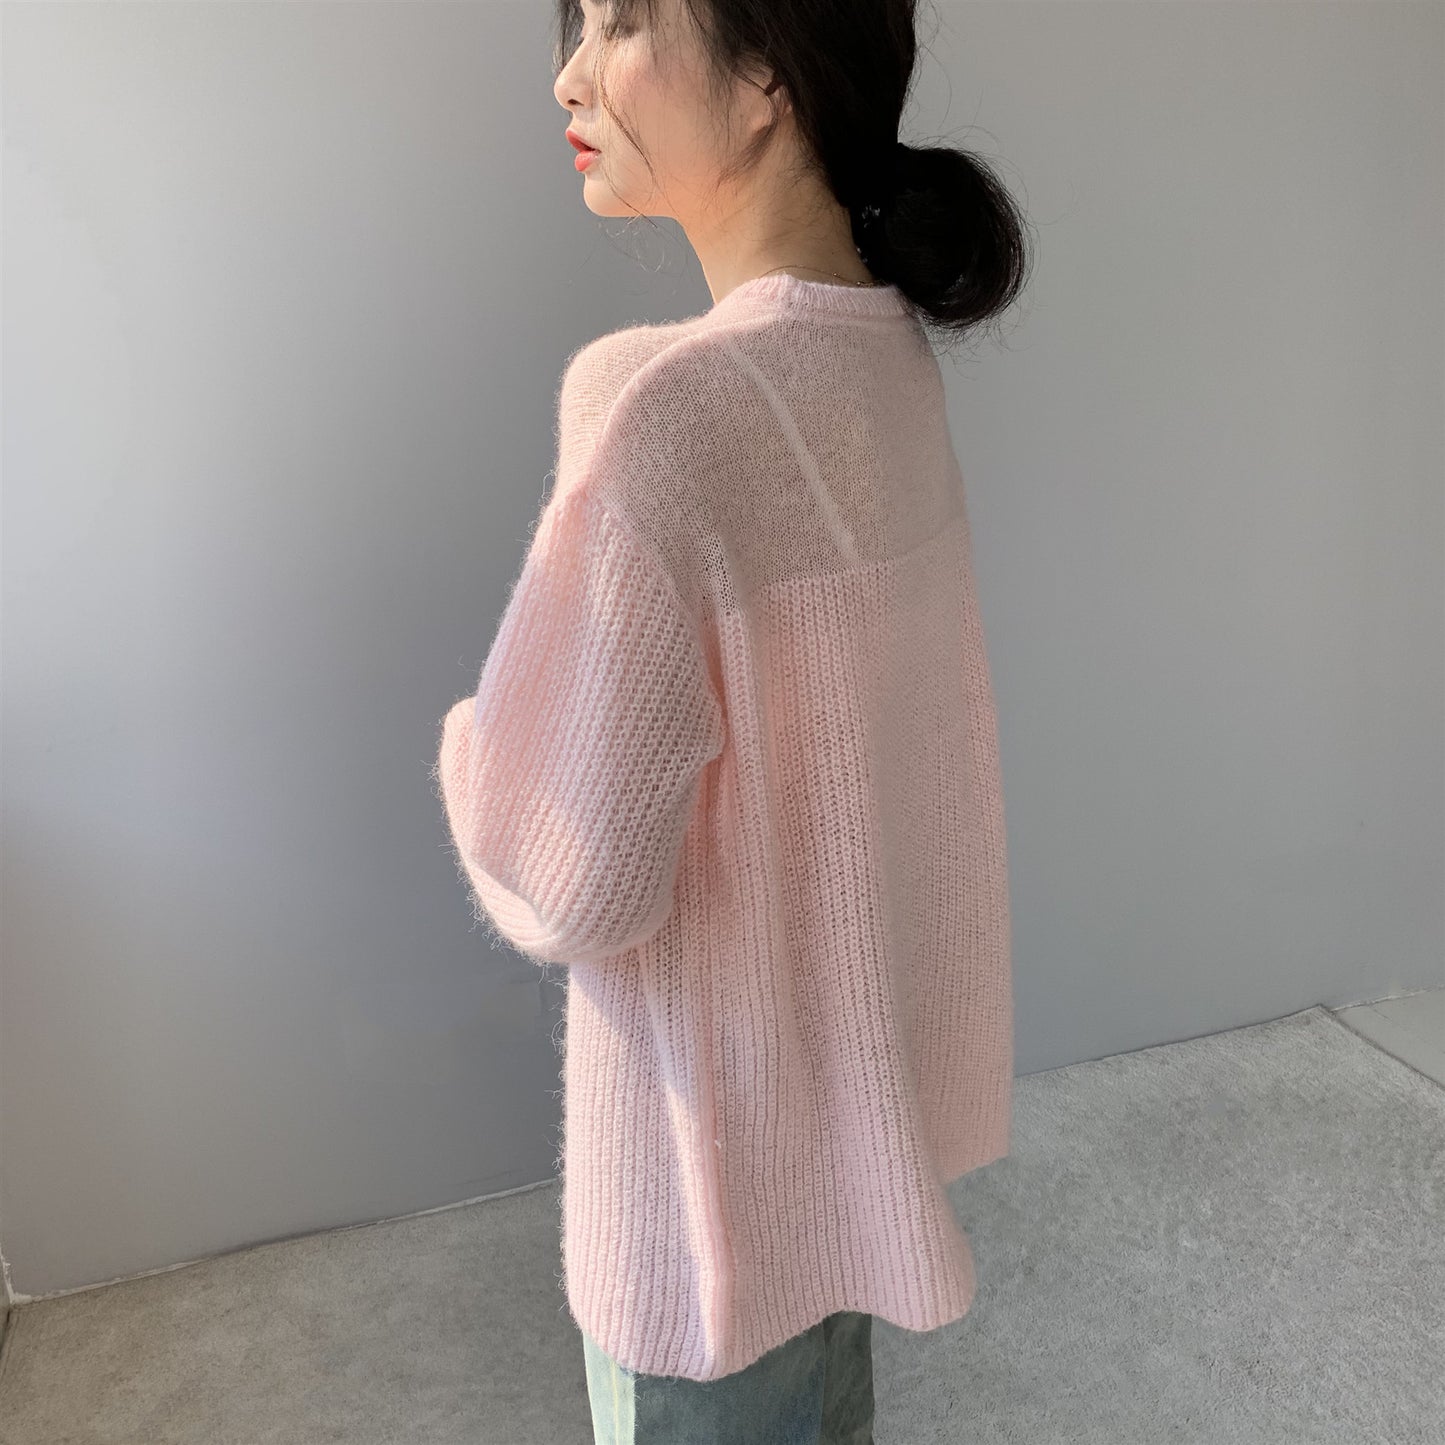 Suéter suelto de manga larga con cuello redondo para mujer